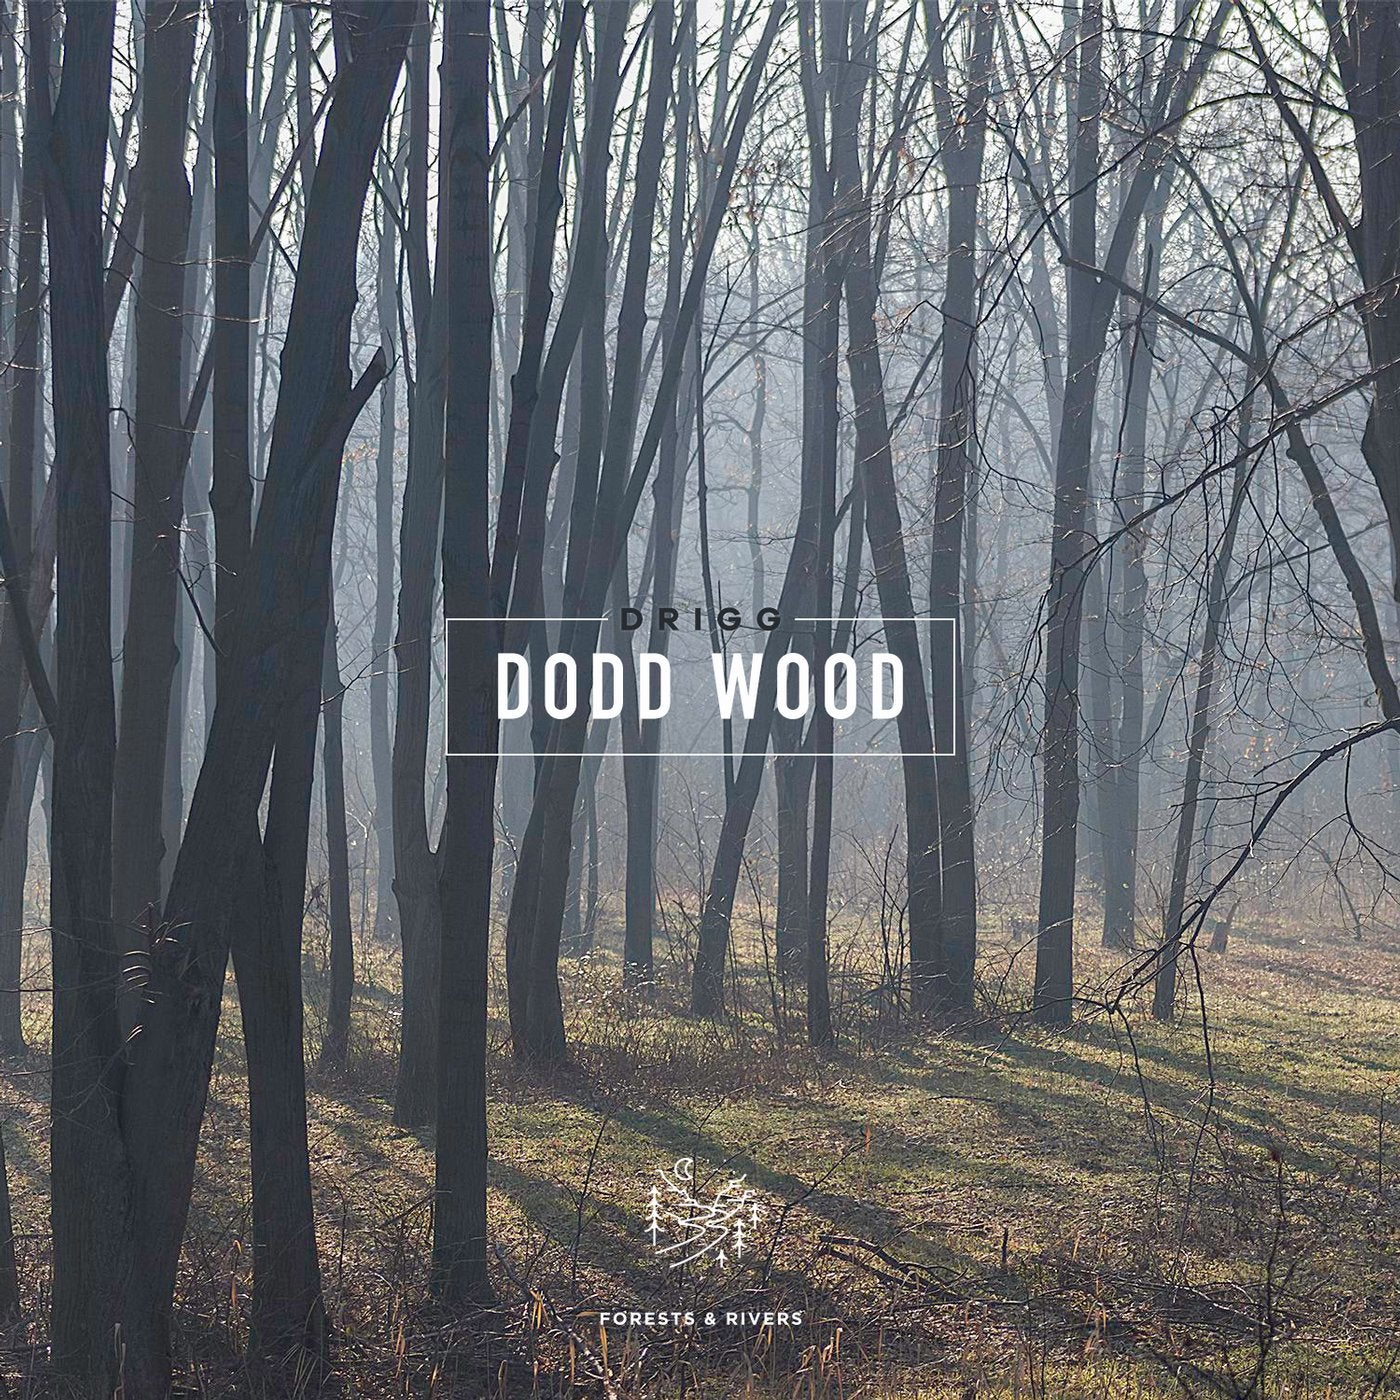 Dodd Wood